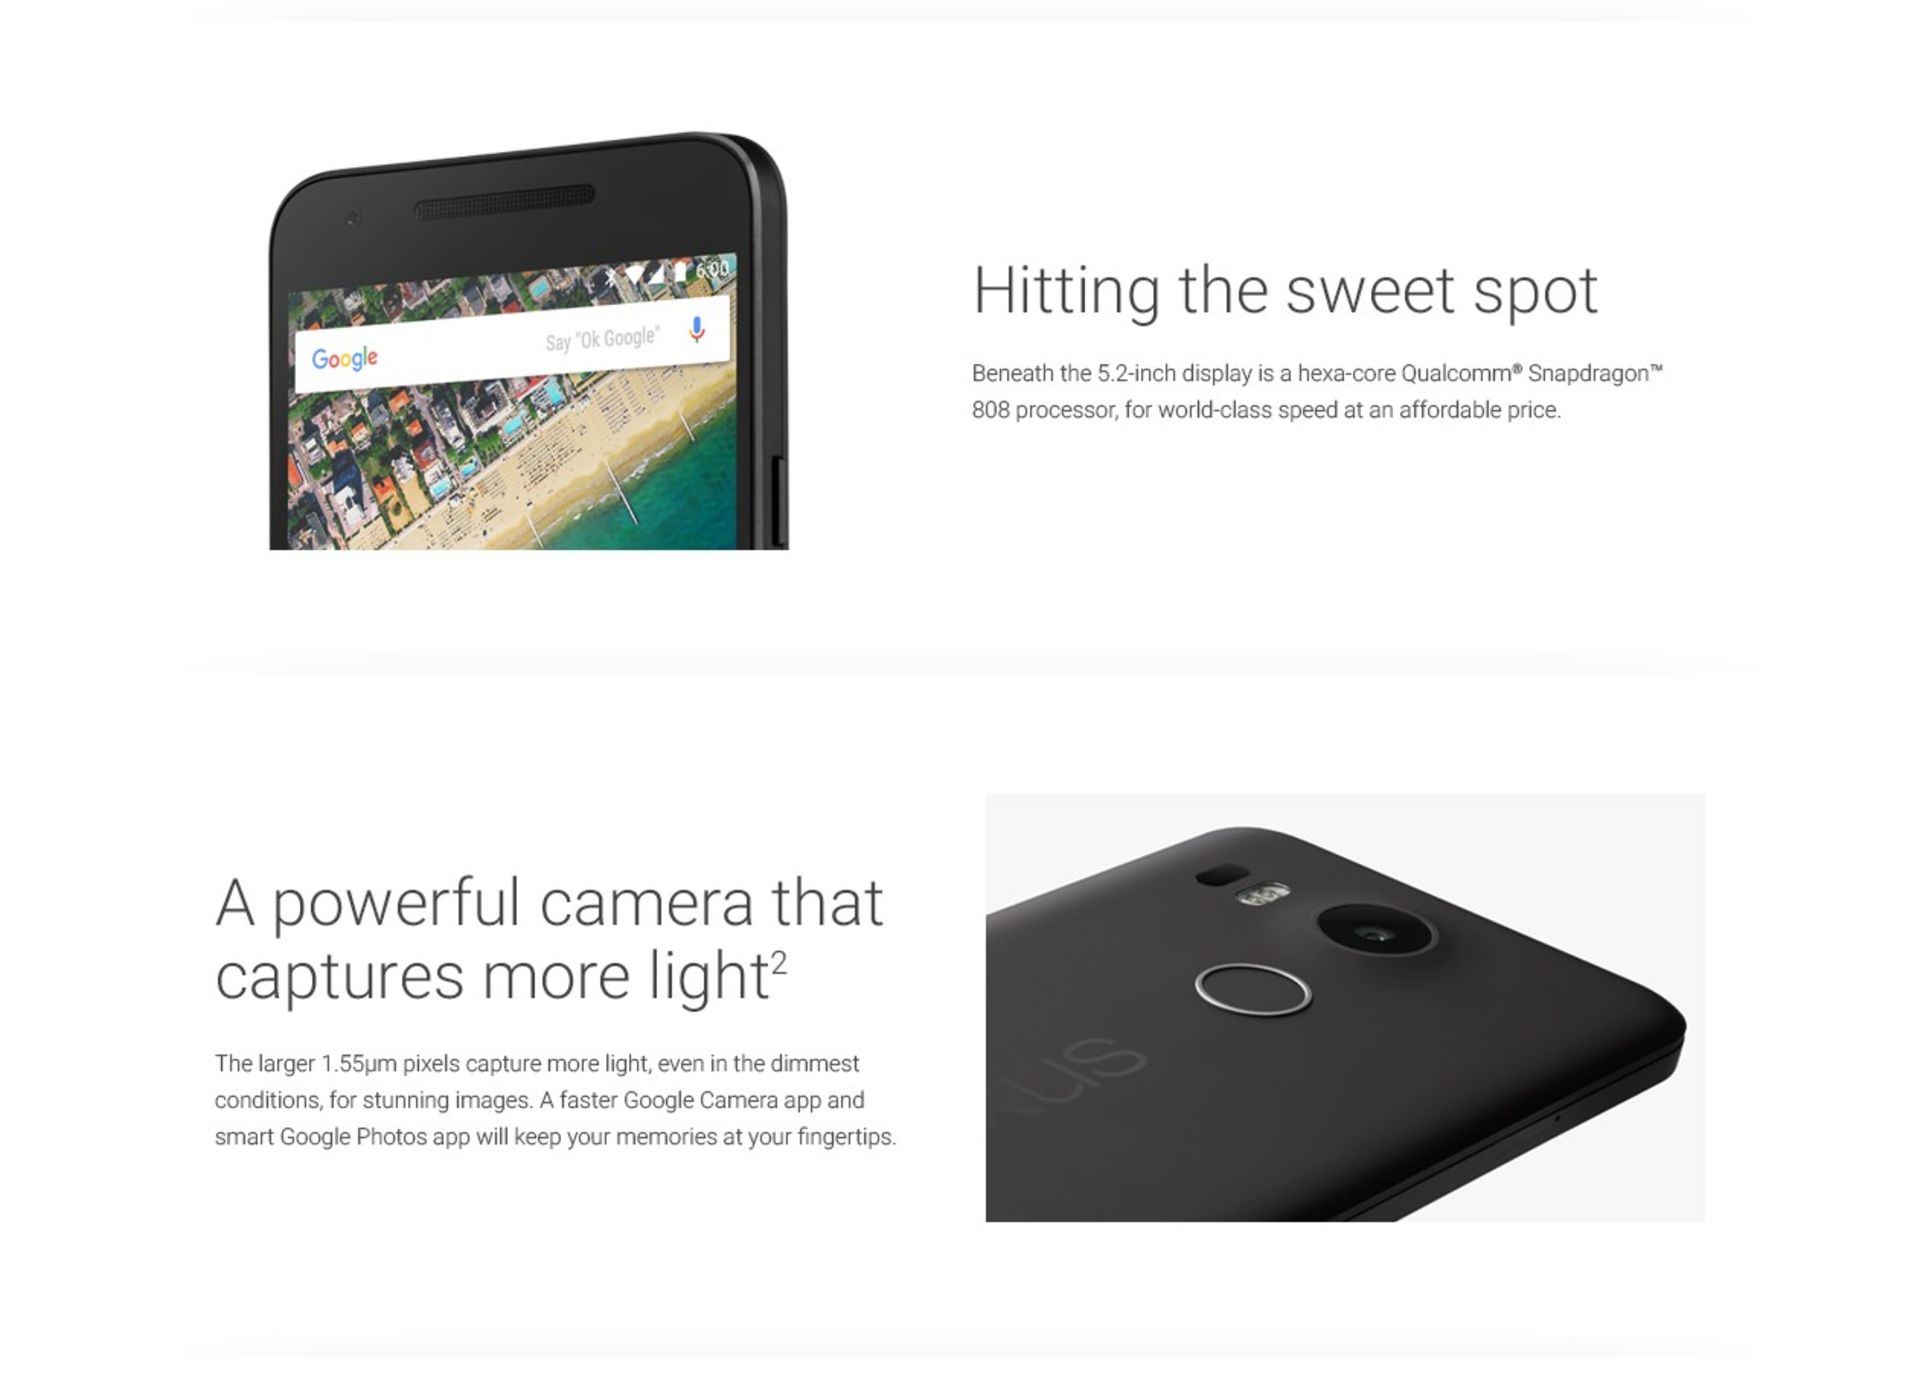 Google Nexus6 5X specs